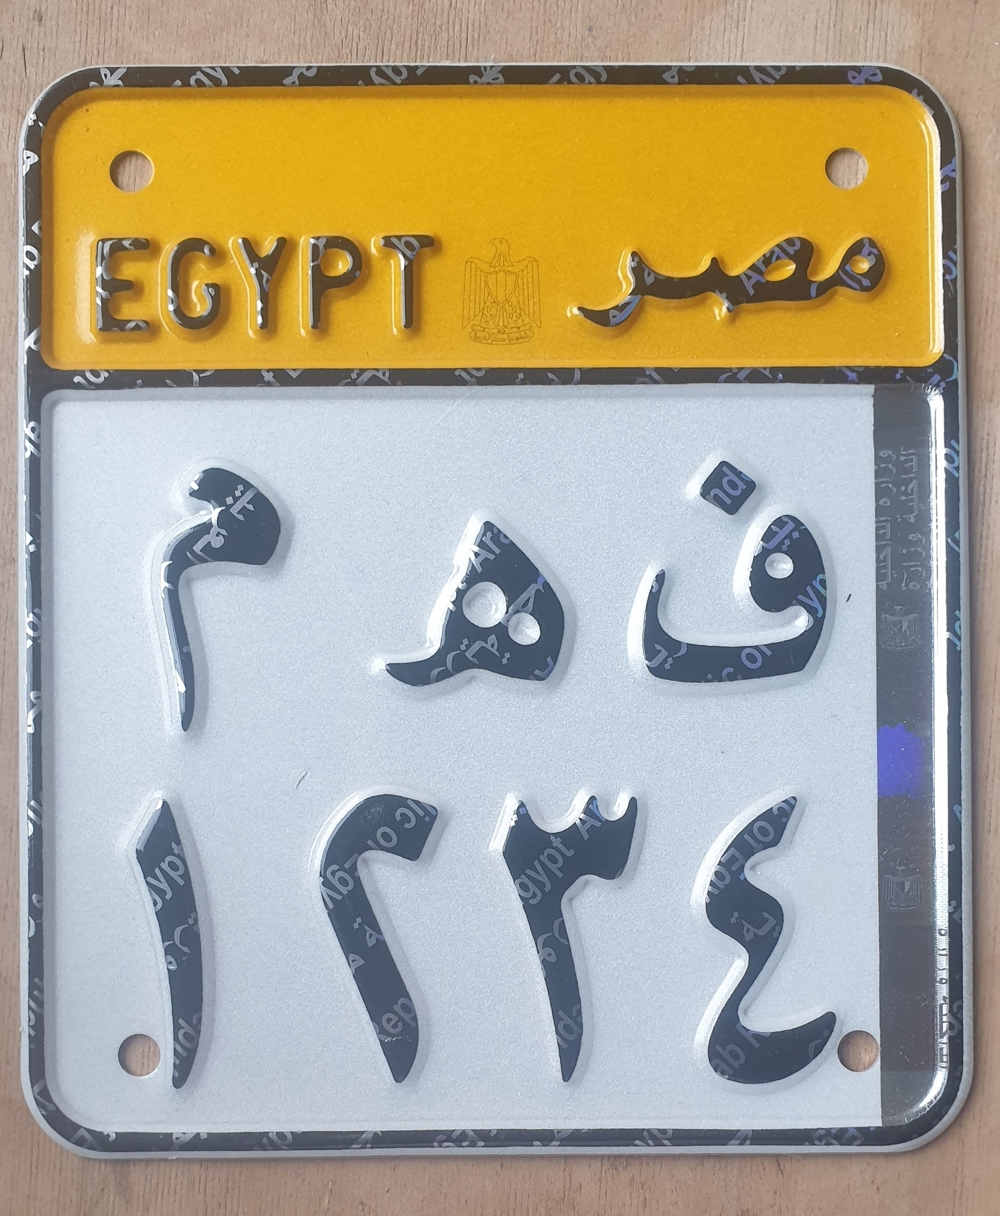 Ägypten M/C license plate